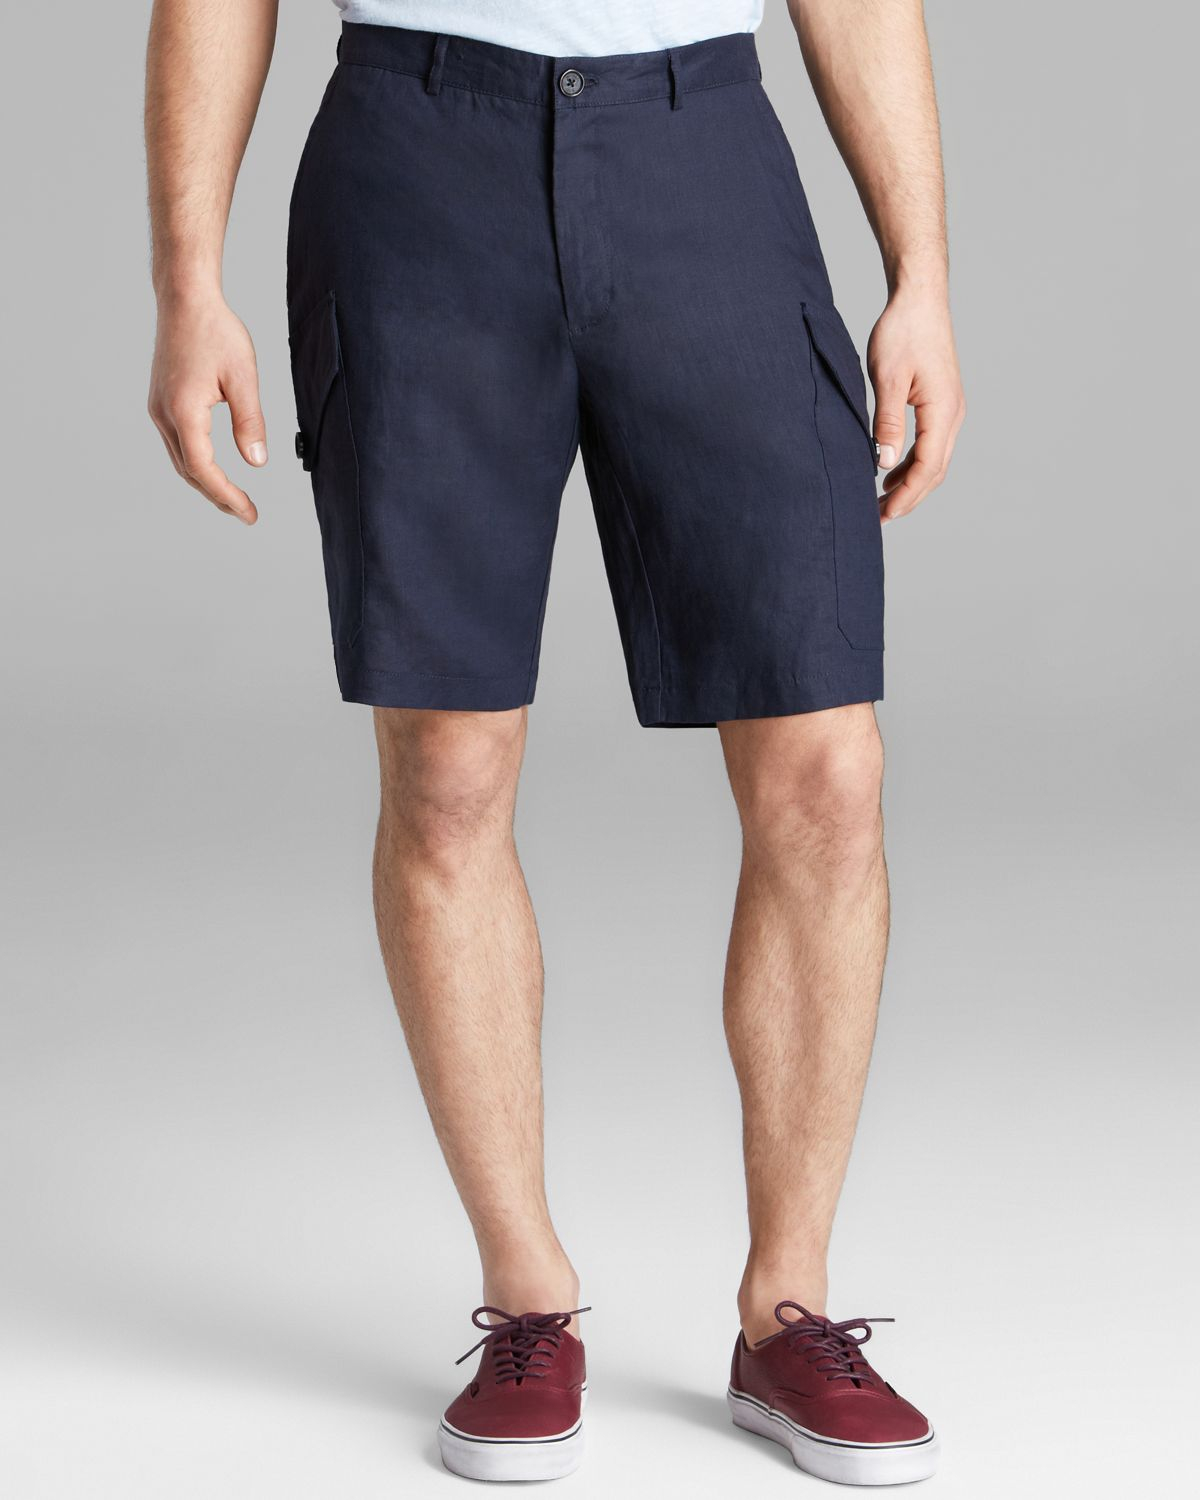 michael kors shorts men's